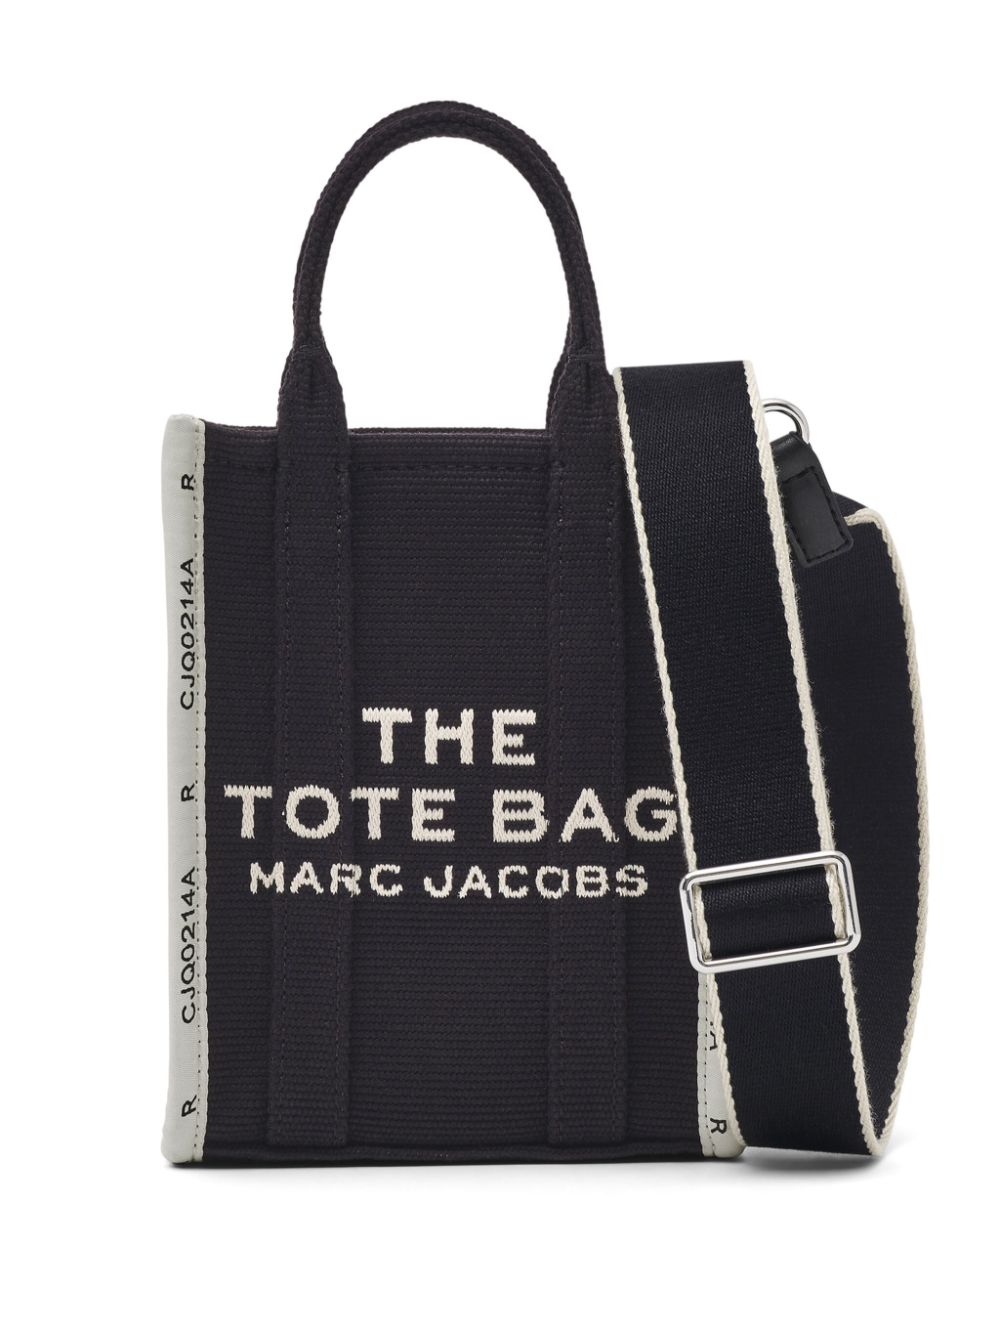 The Jacquard Mini Tote bag<BR/><BR/><BR/>